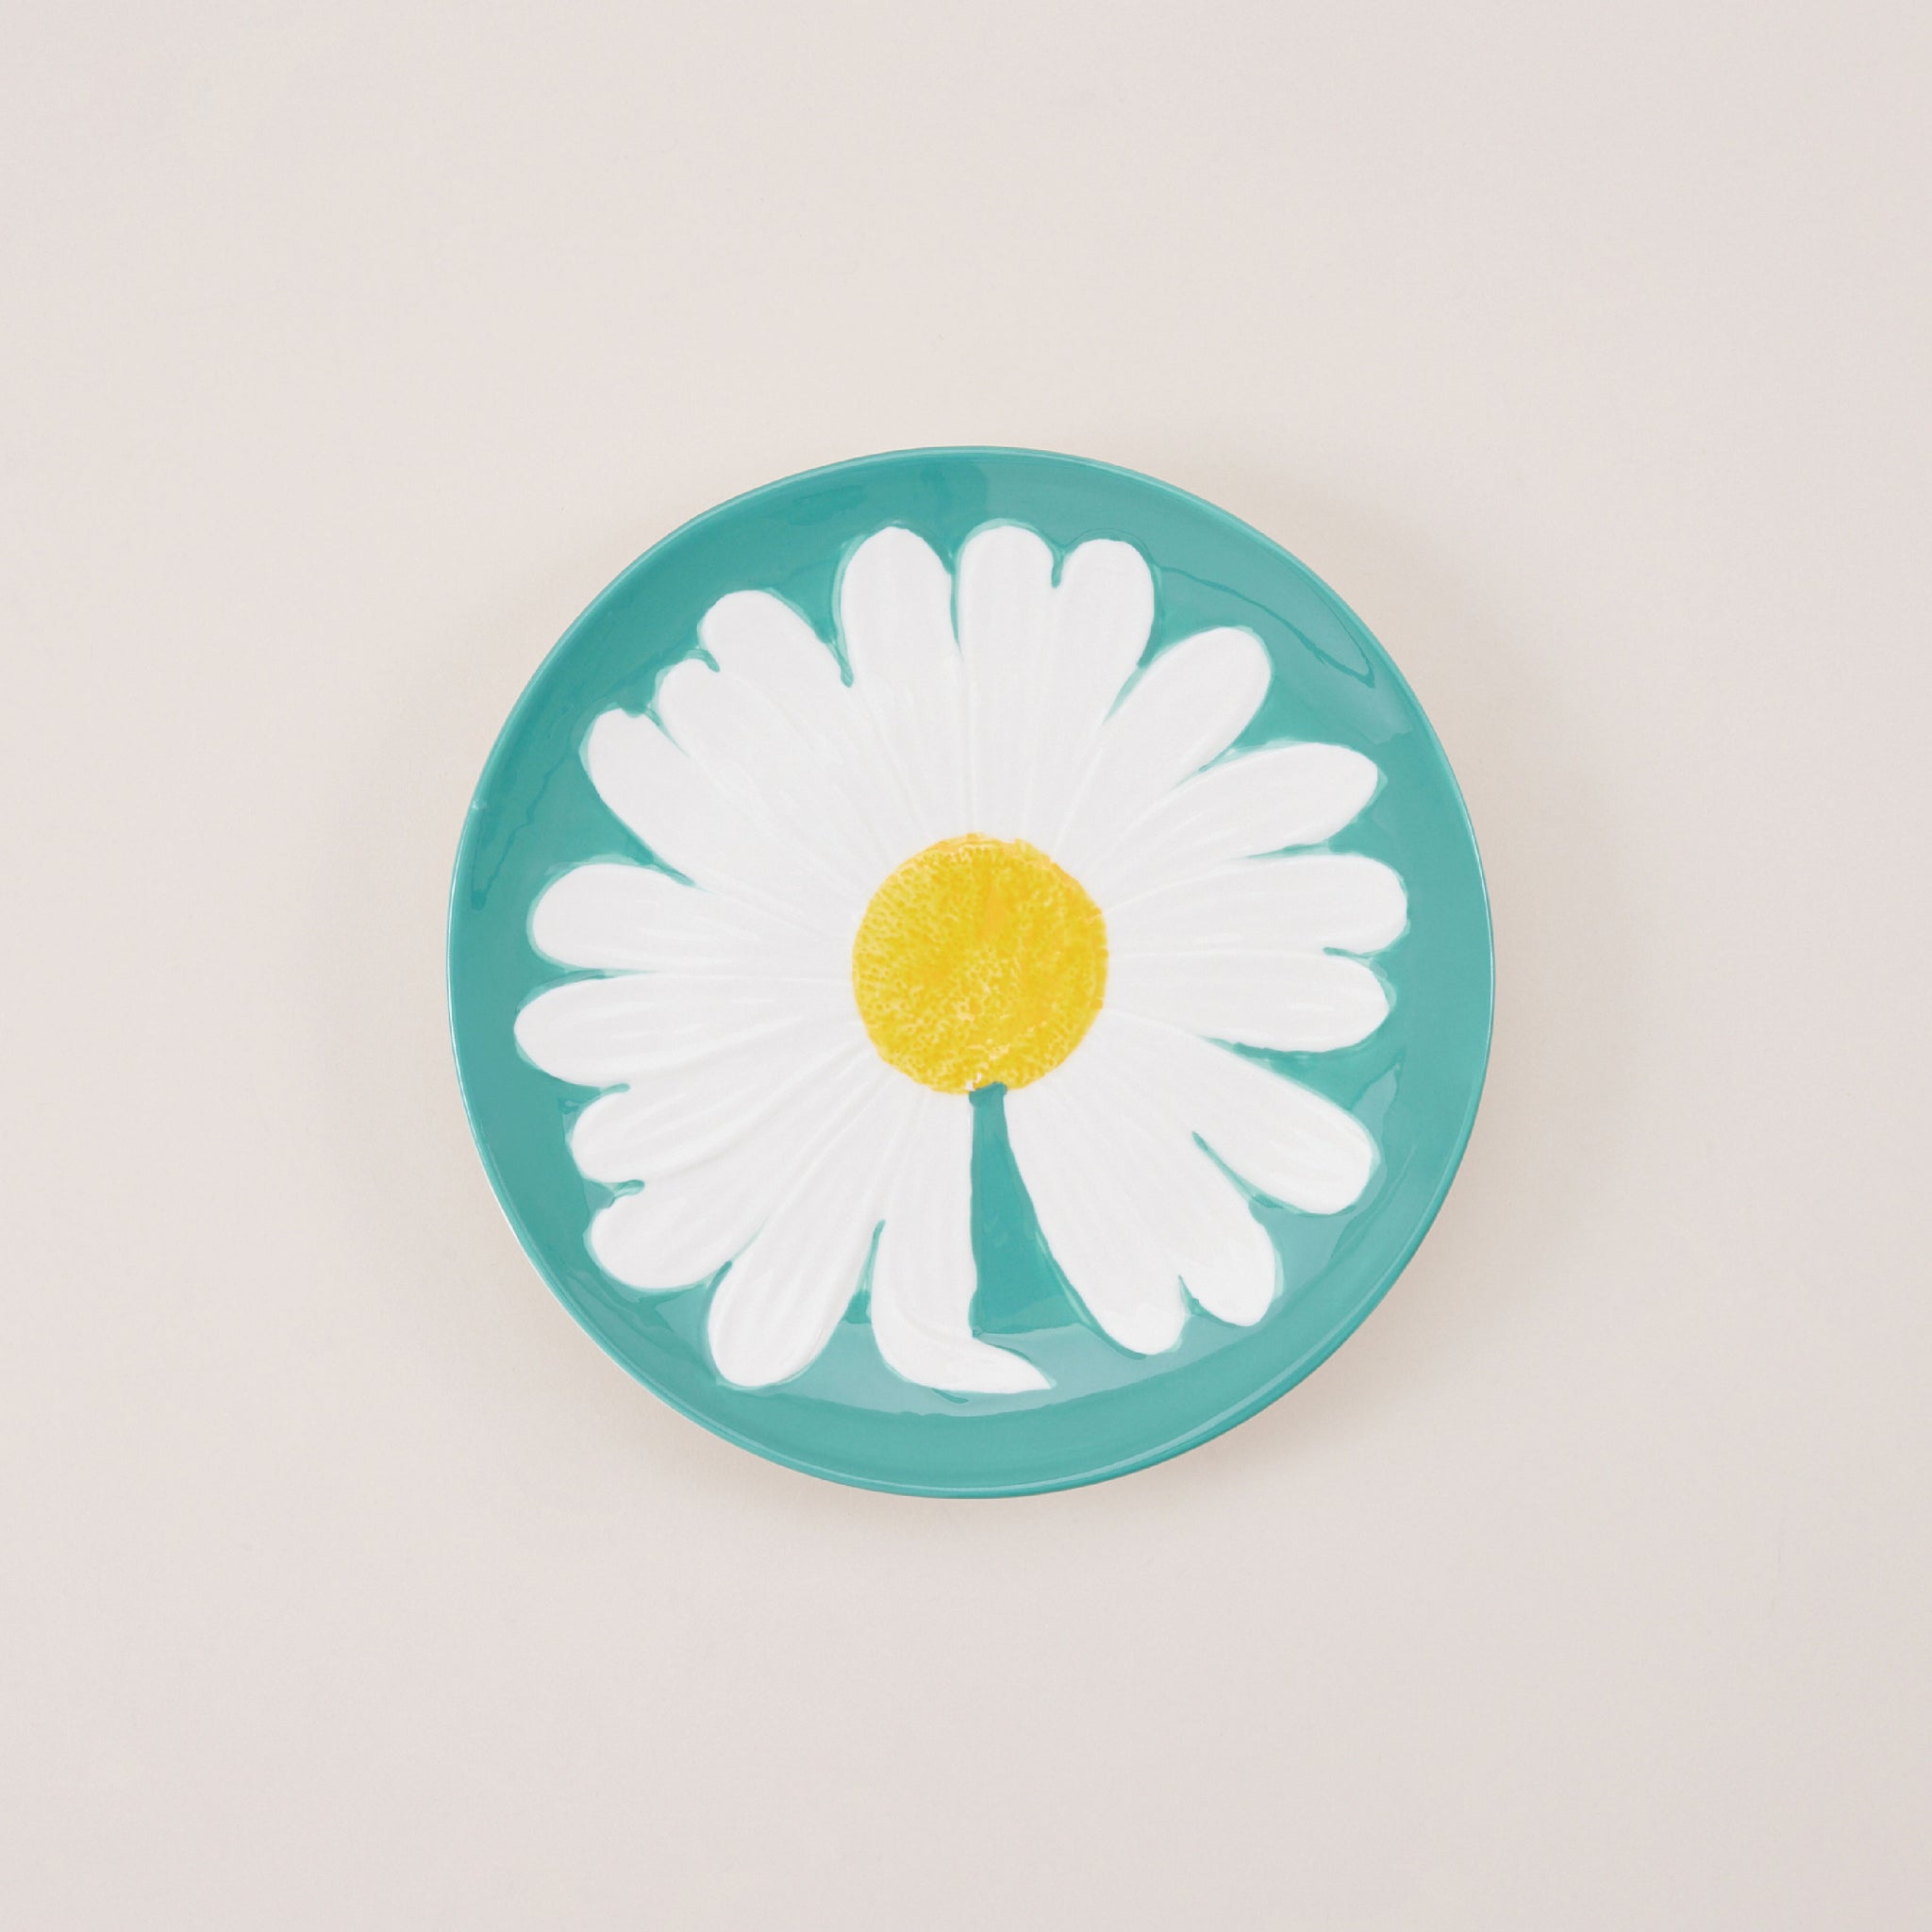 Daisy Plate | จานเซรามิก ดอกเดซี่